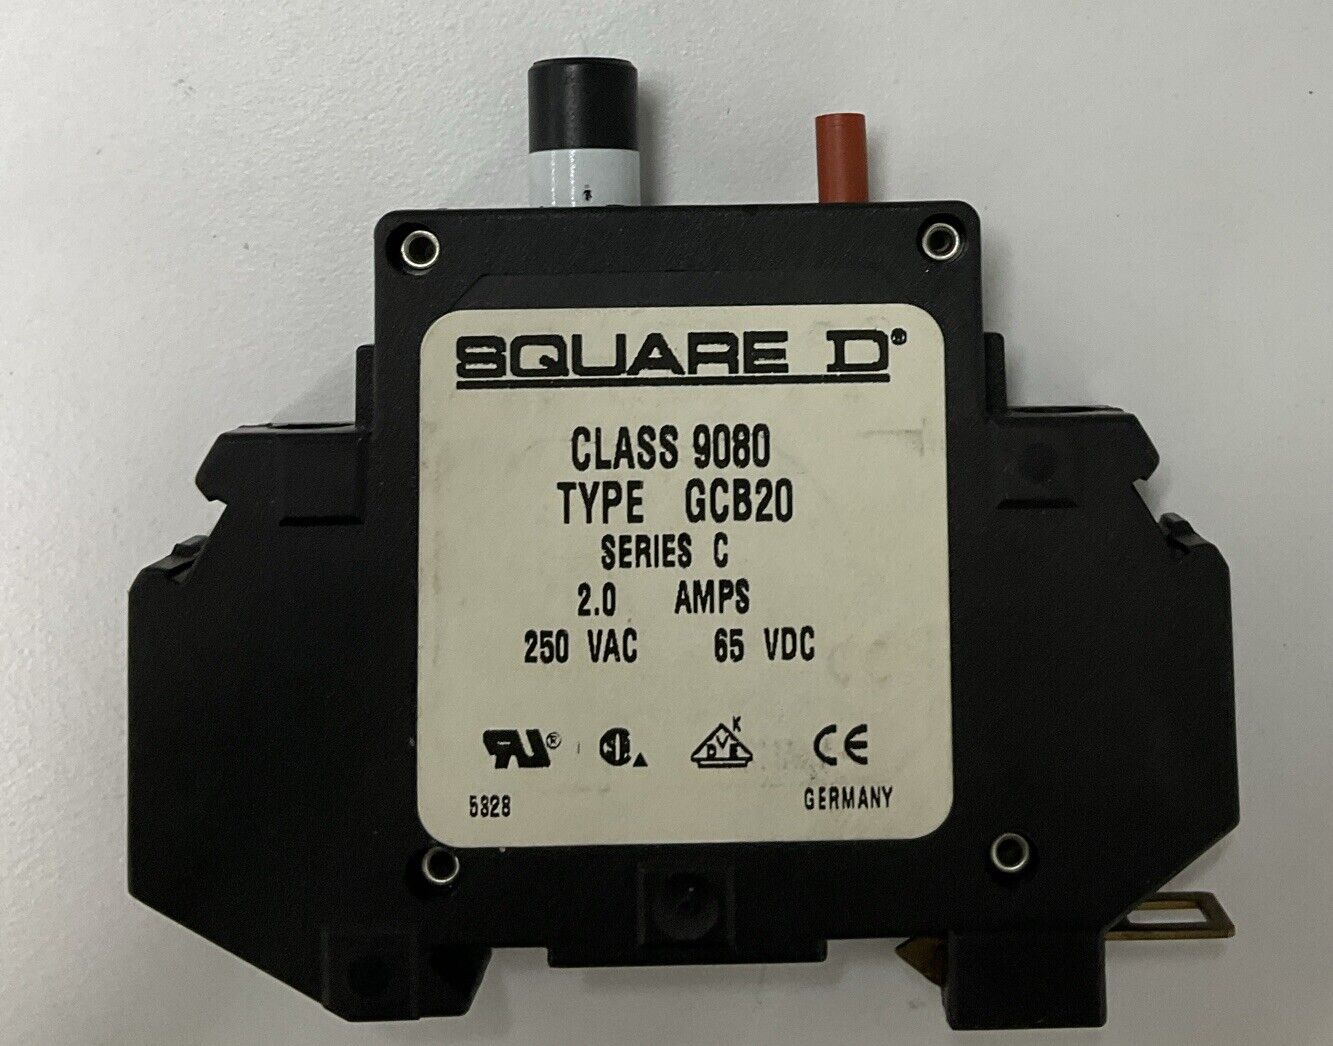 Square D 9080-GCB20 Series C 2.0 Amp Circuit Breaker 250VAC (CL286)